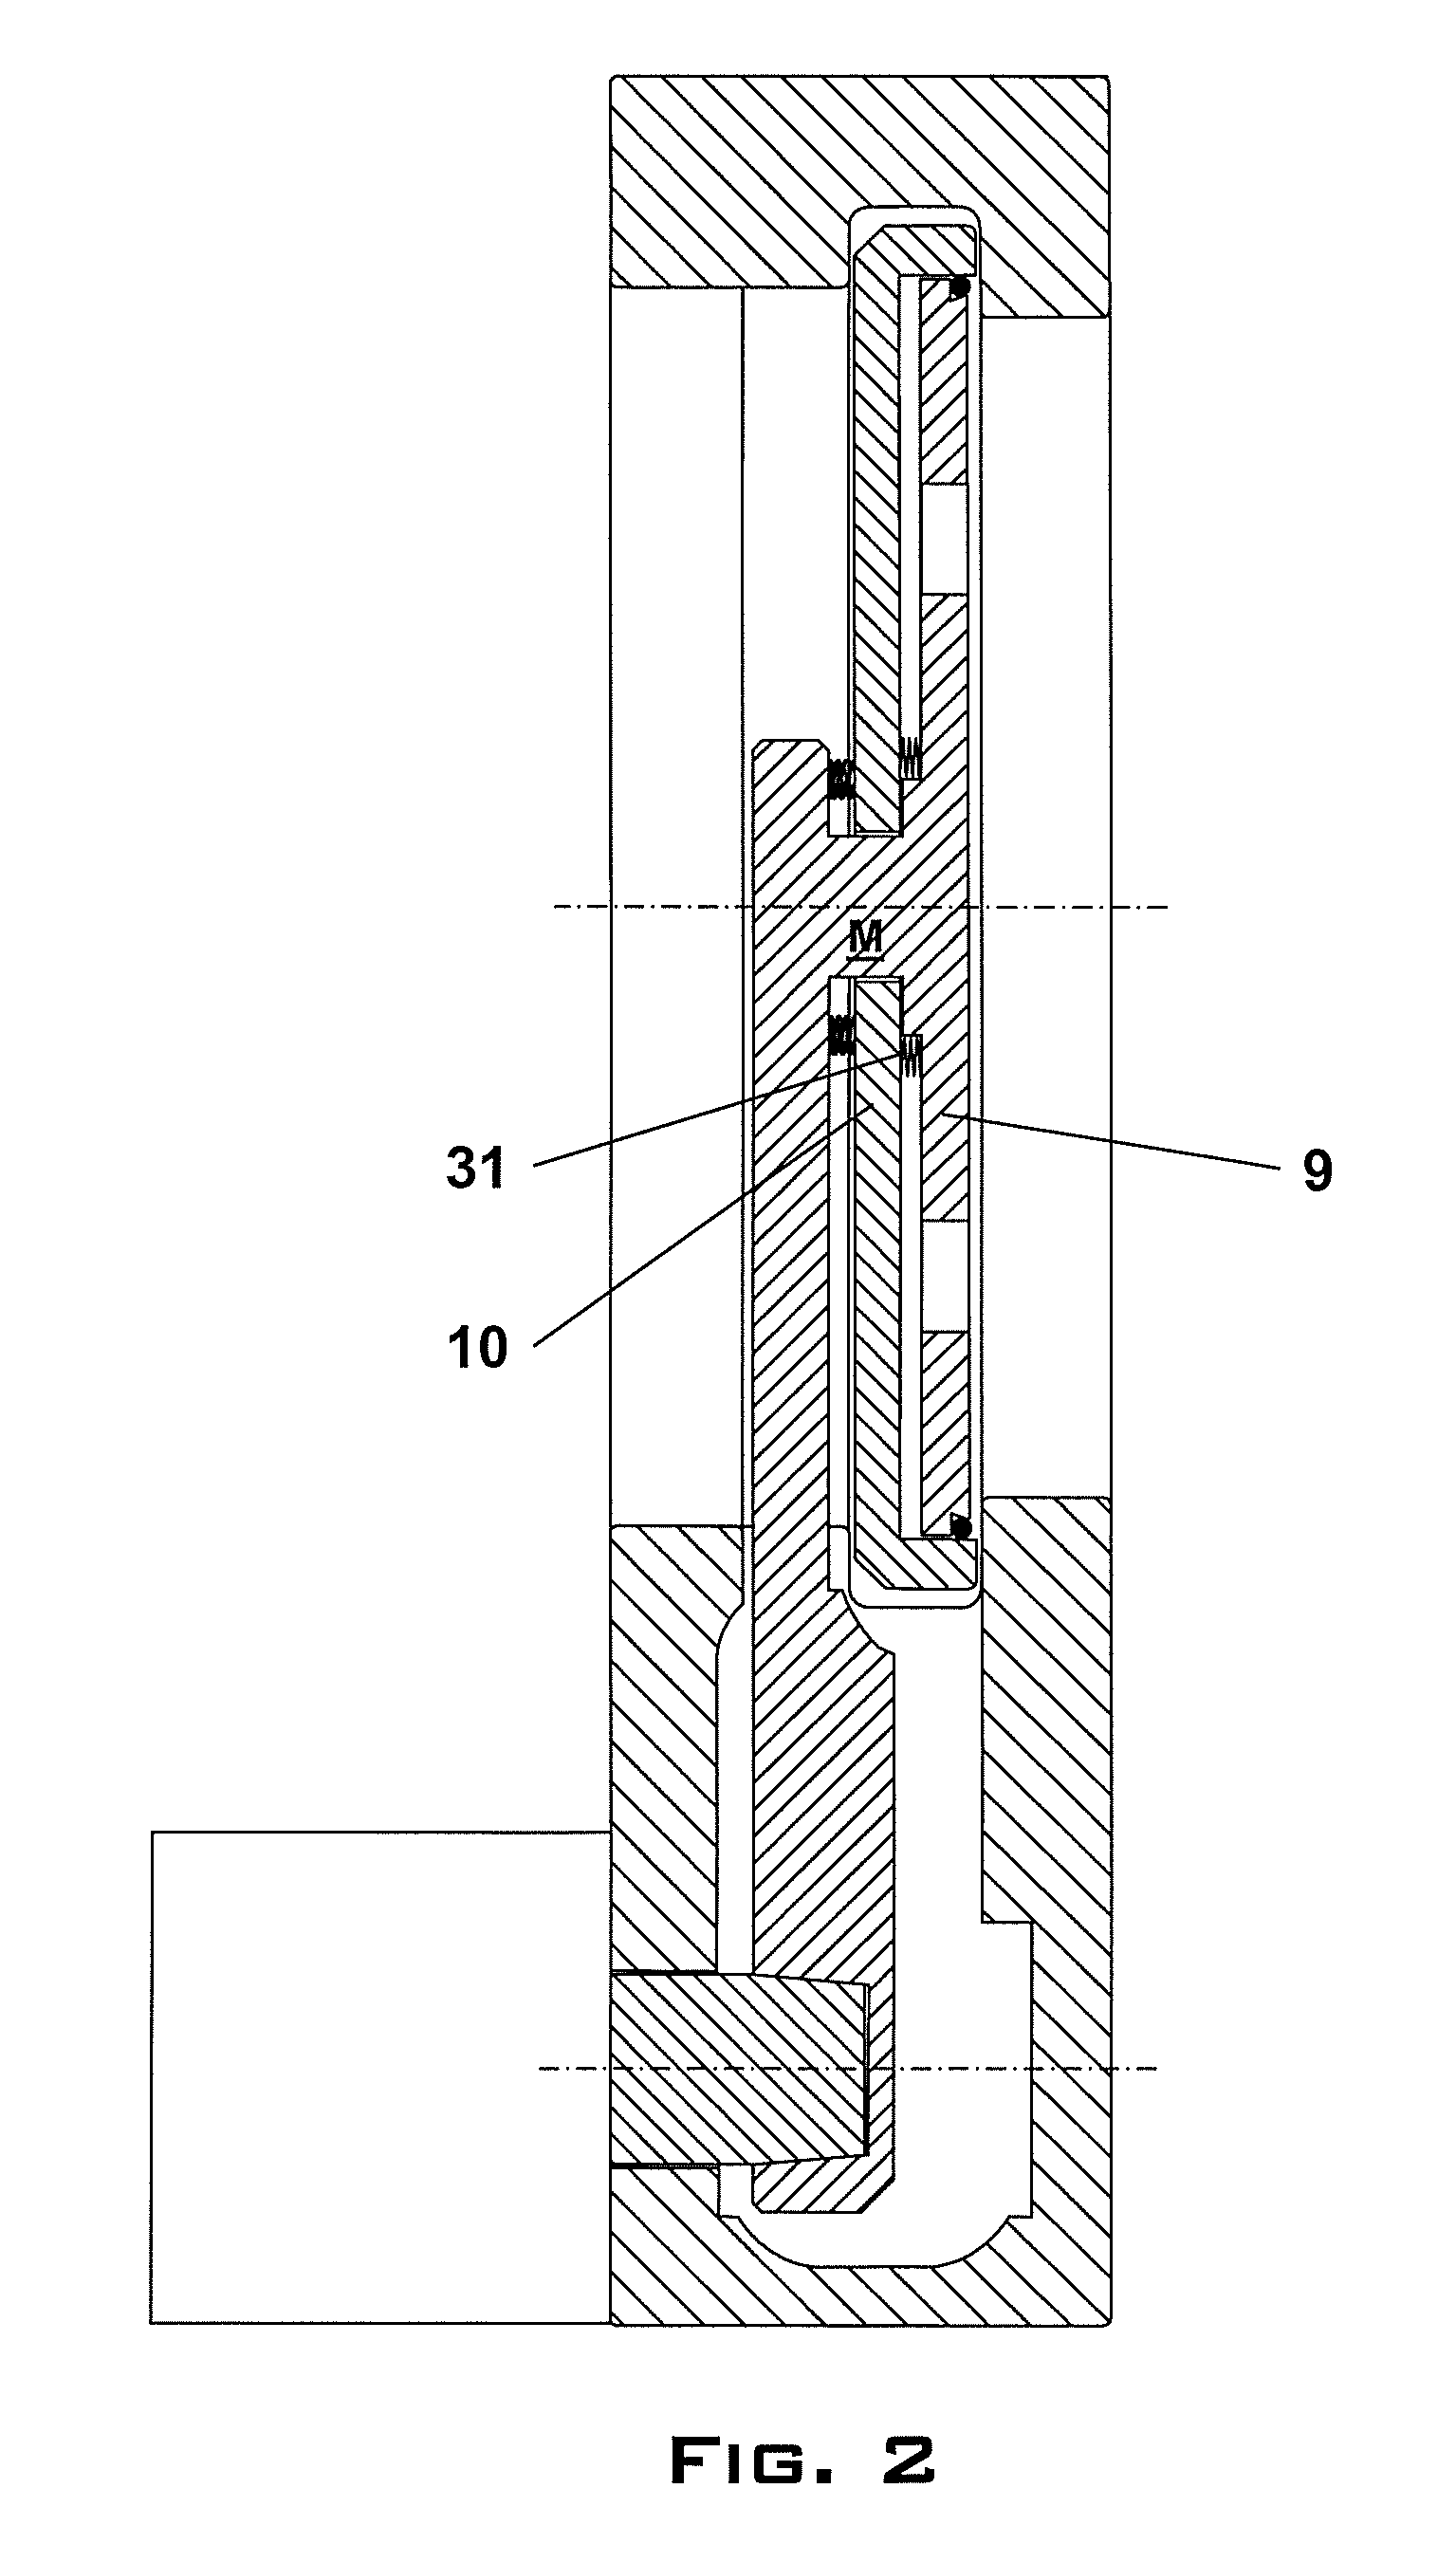 Pendulum and slide gate vacuum valve